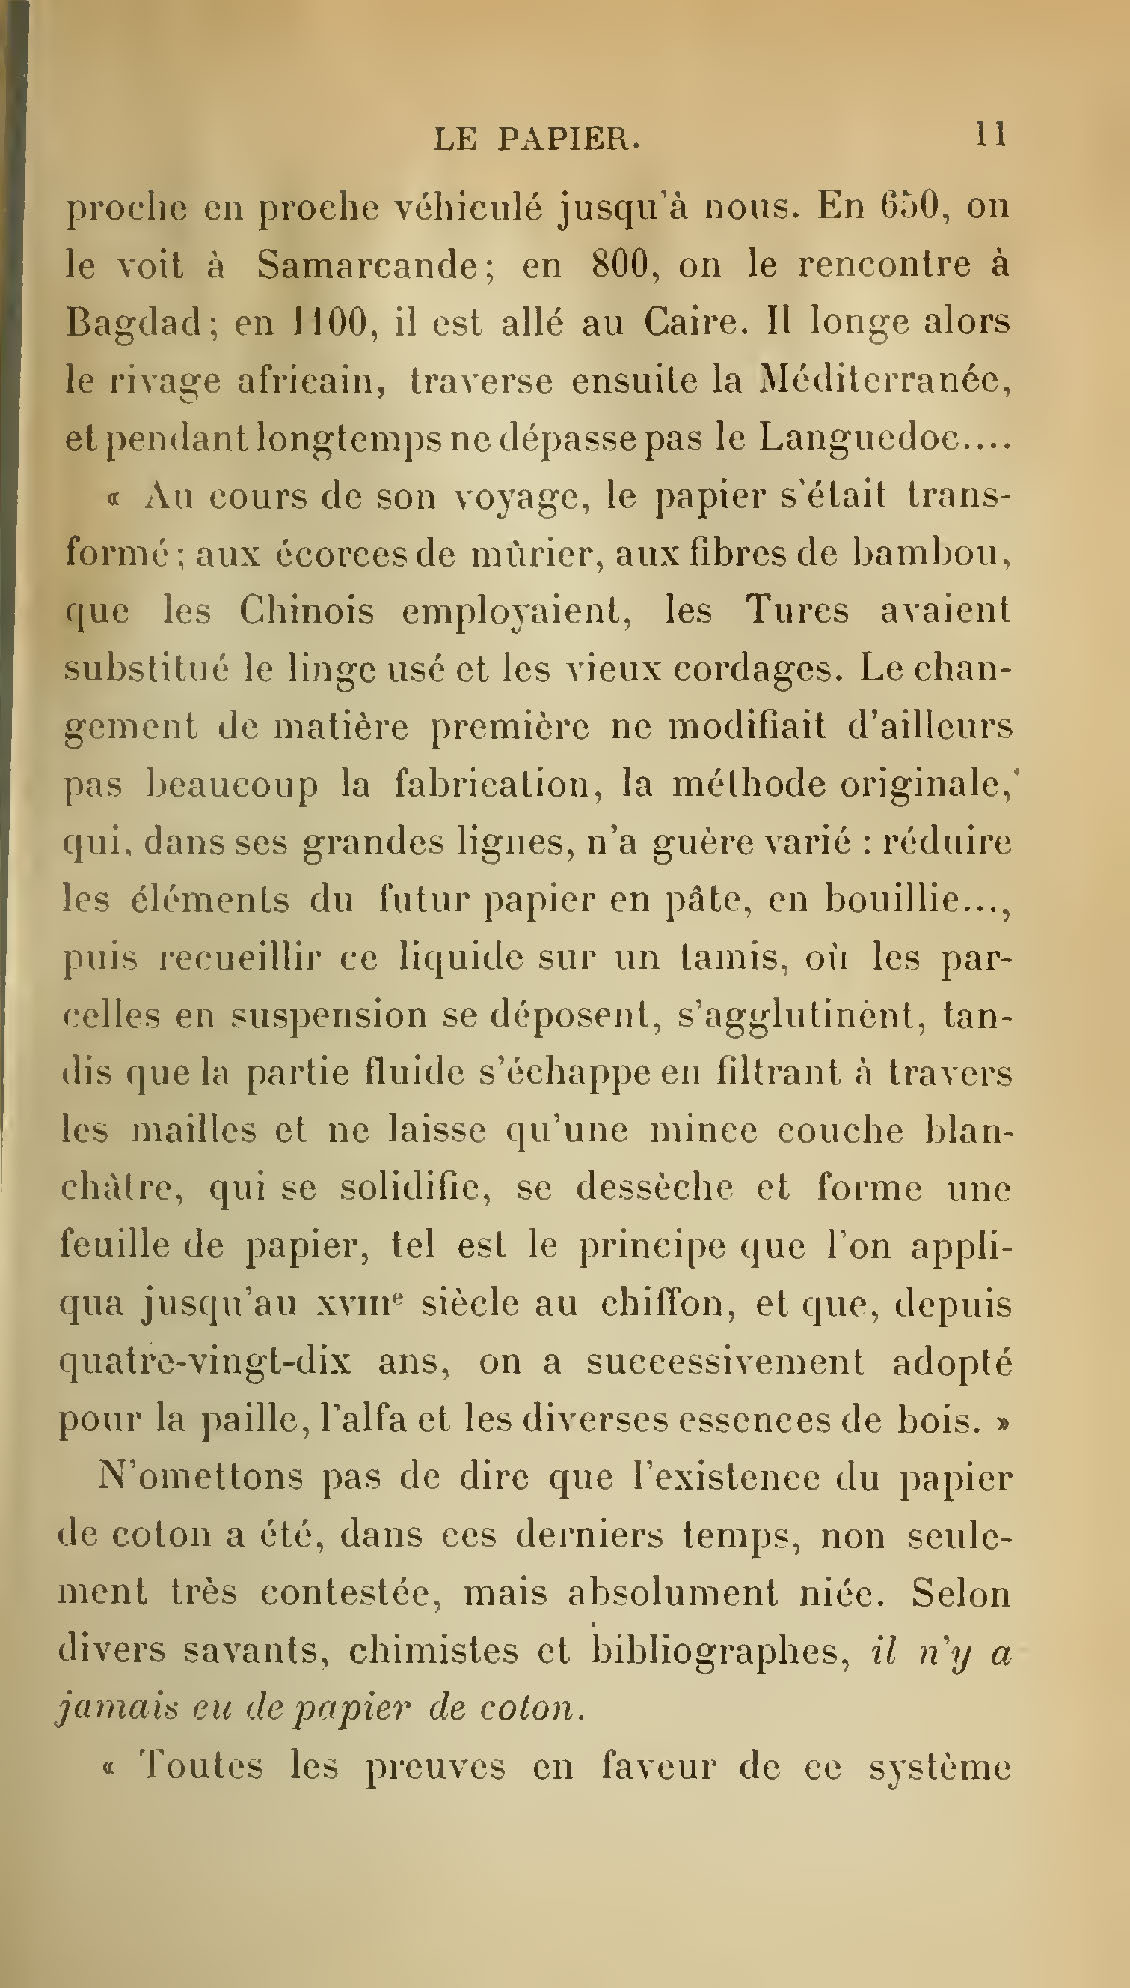 Albert Cim, Le Livre, t. III, p. 11.